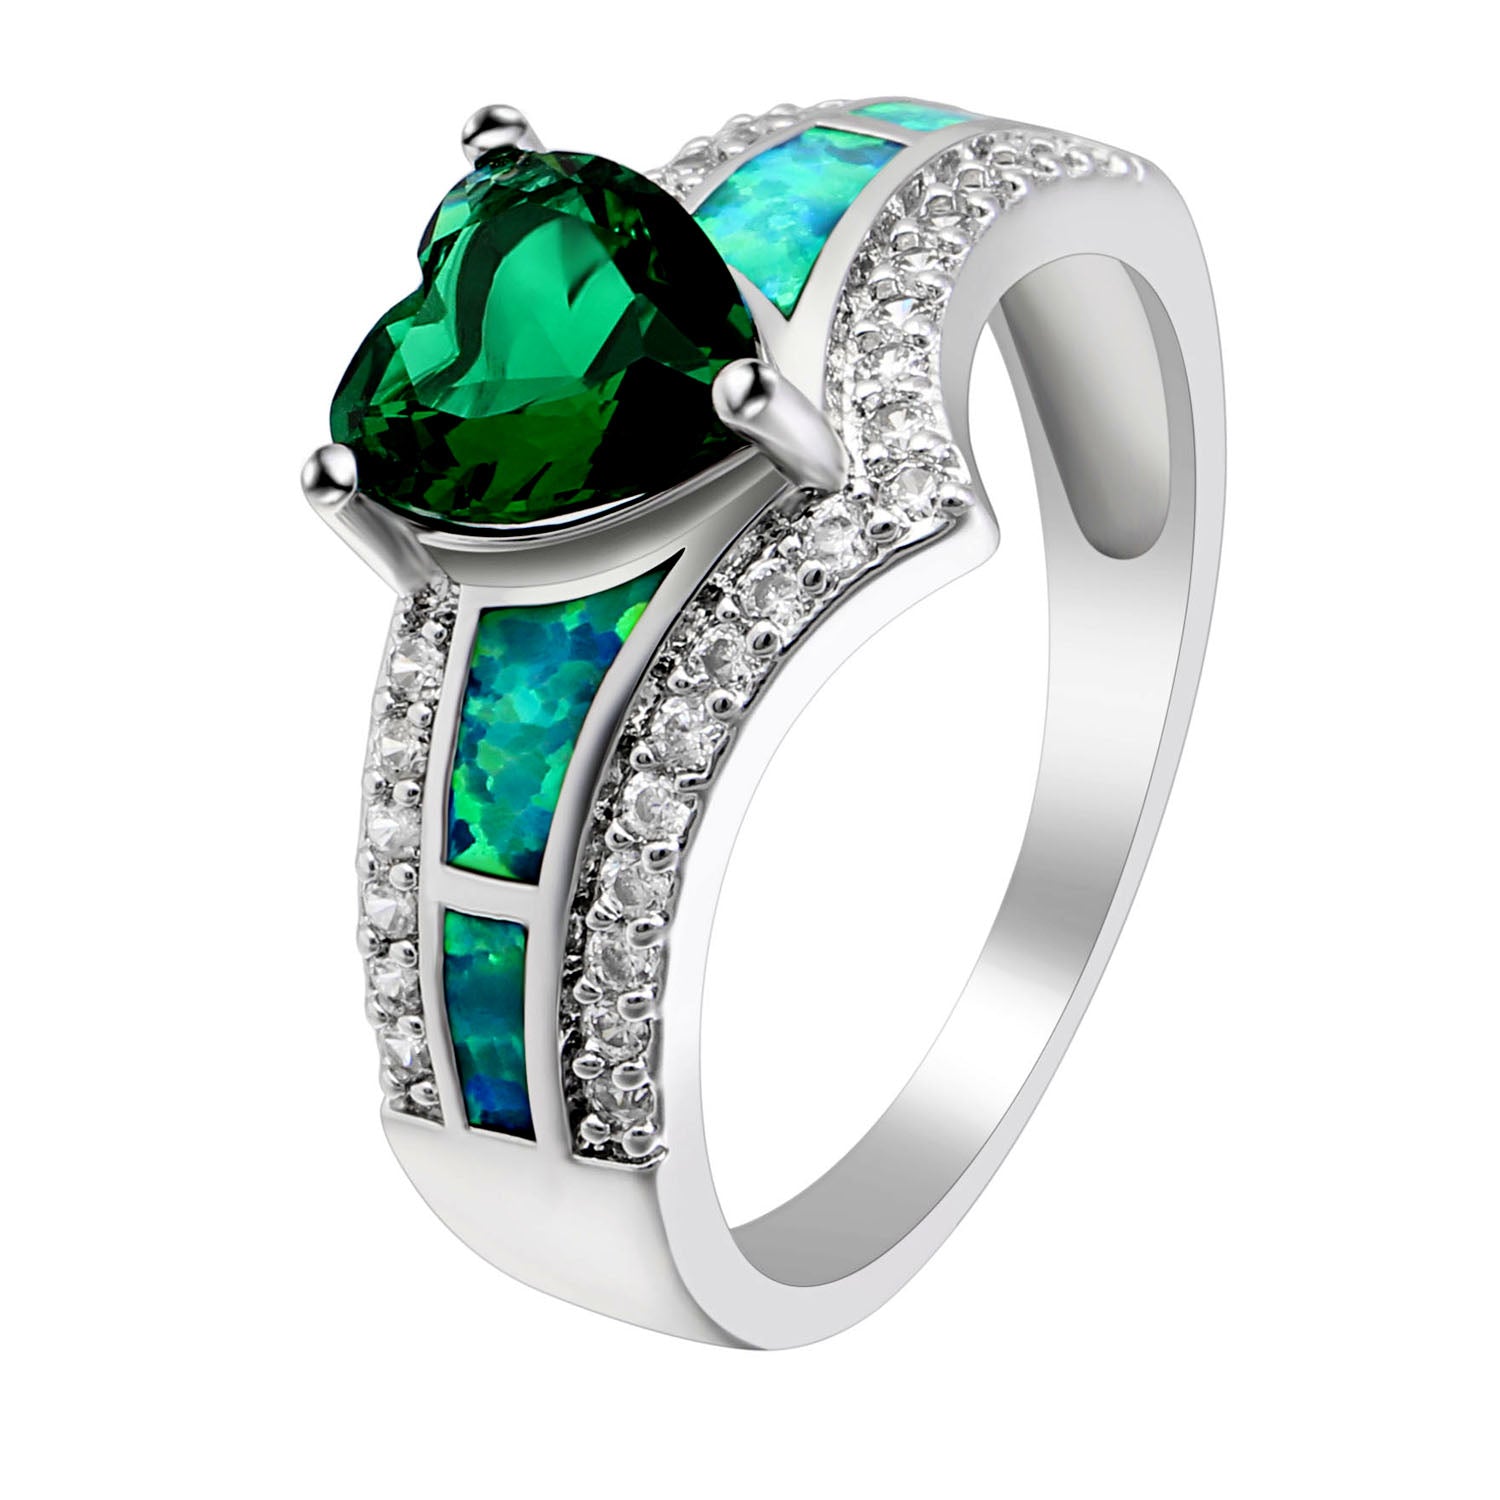 Majestic Heart Cz Promise Ring Created Fire Opal Girl Women Ginger Lyne - Green,11